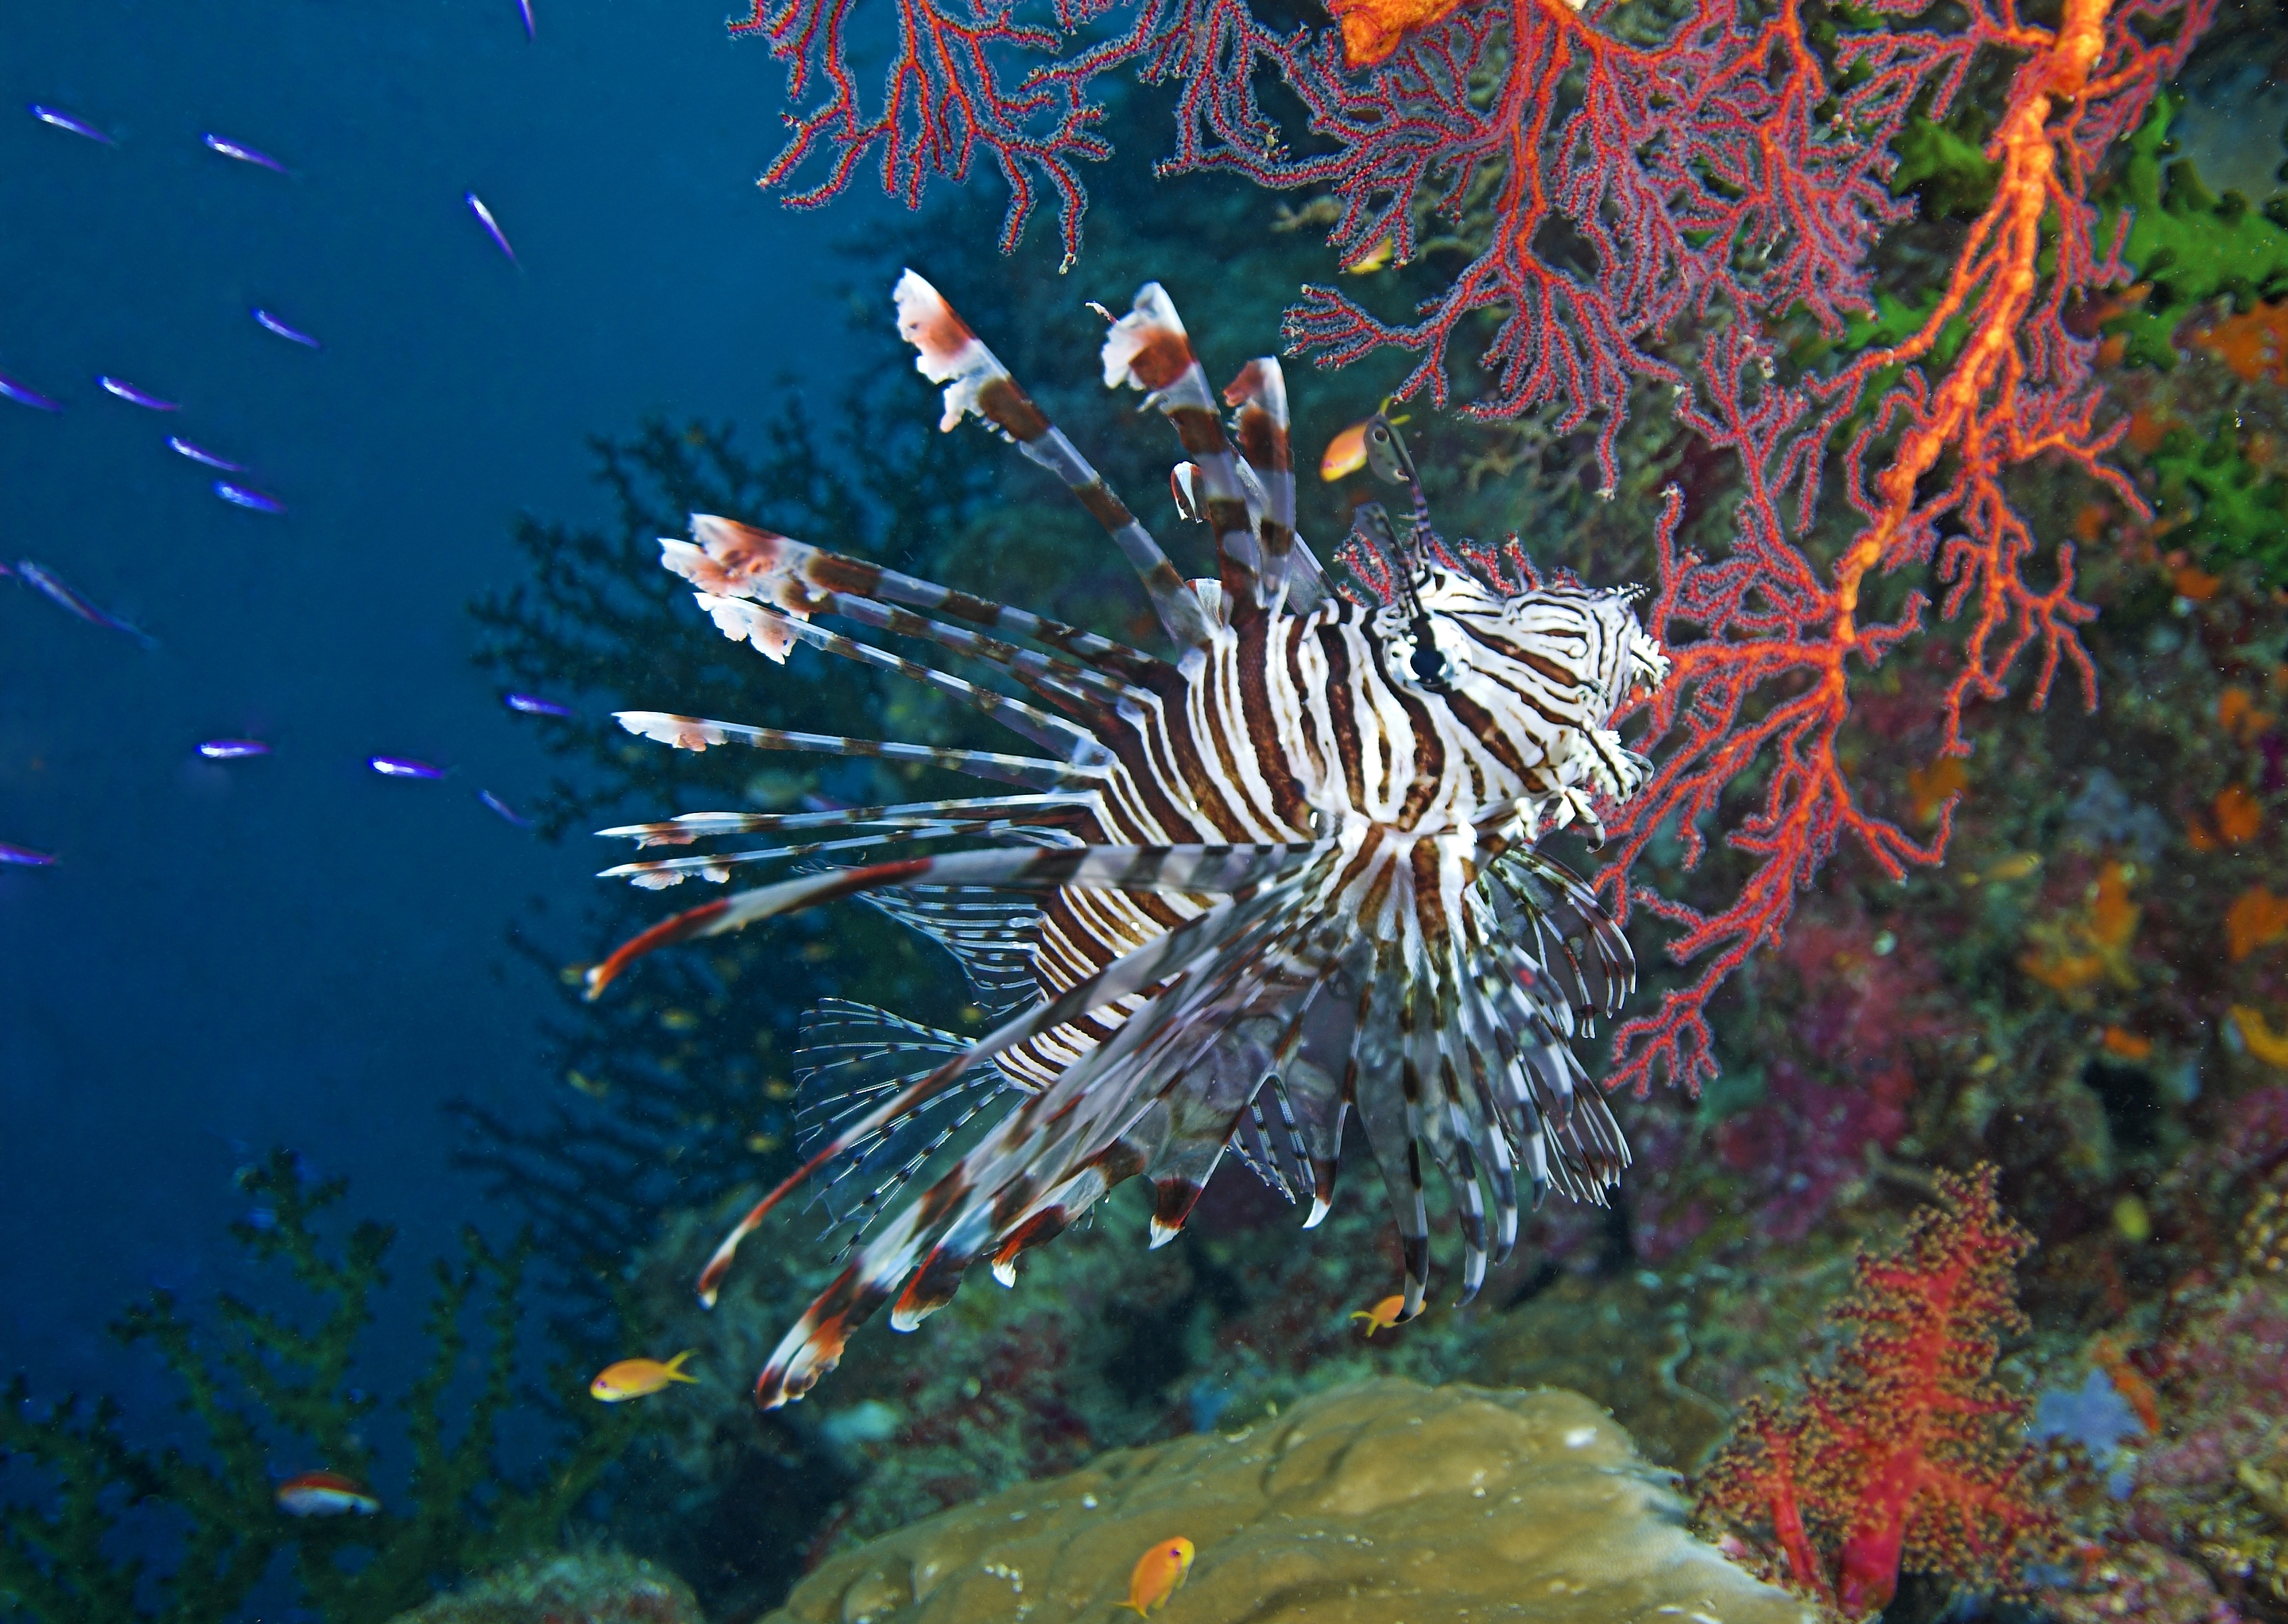 Offshore Reefs